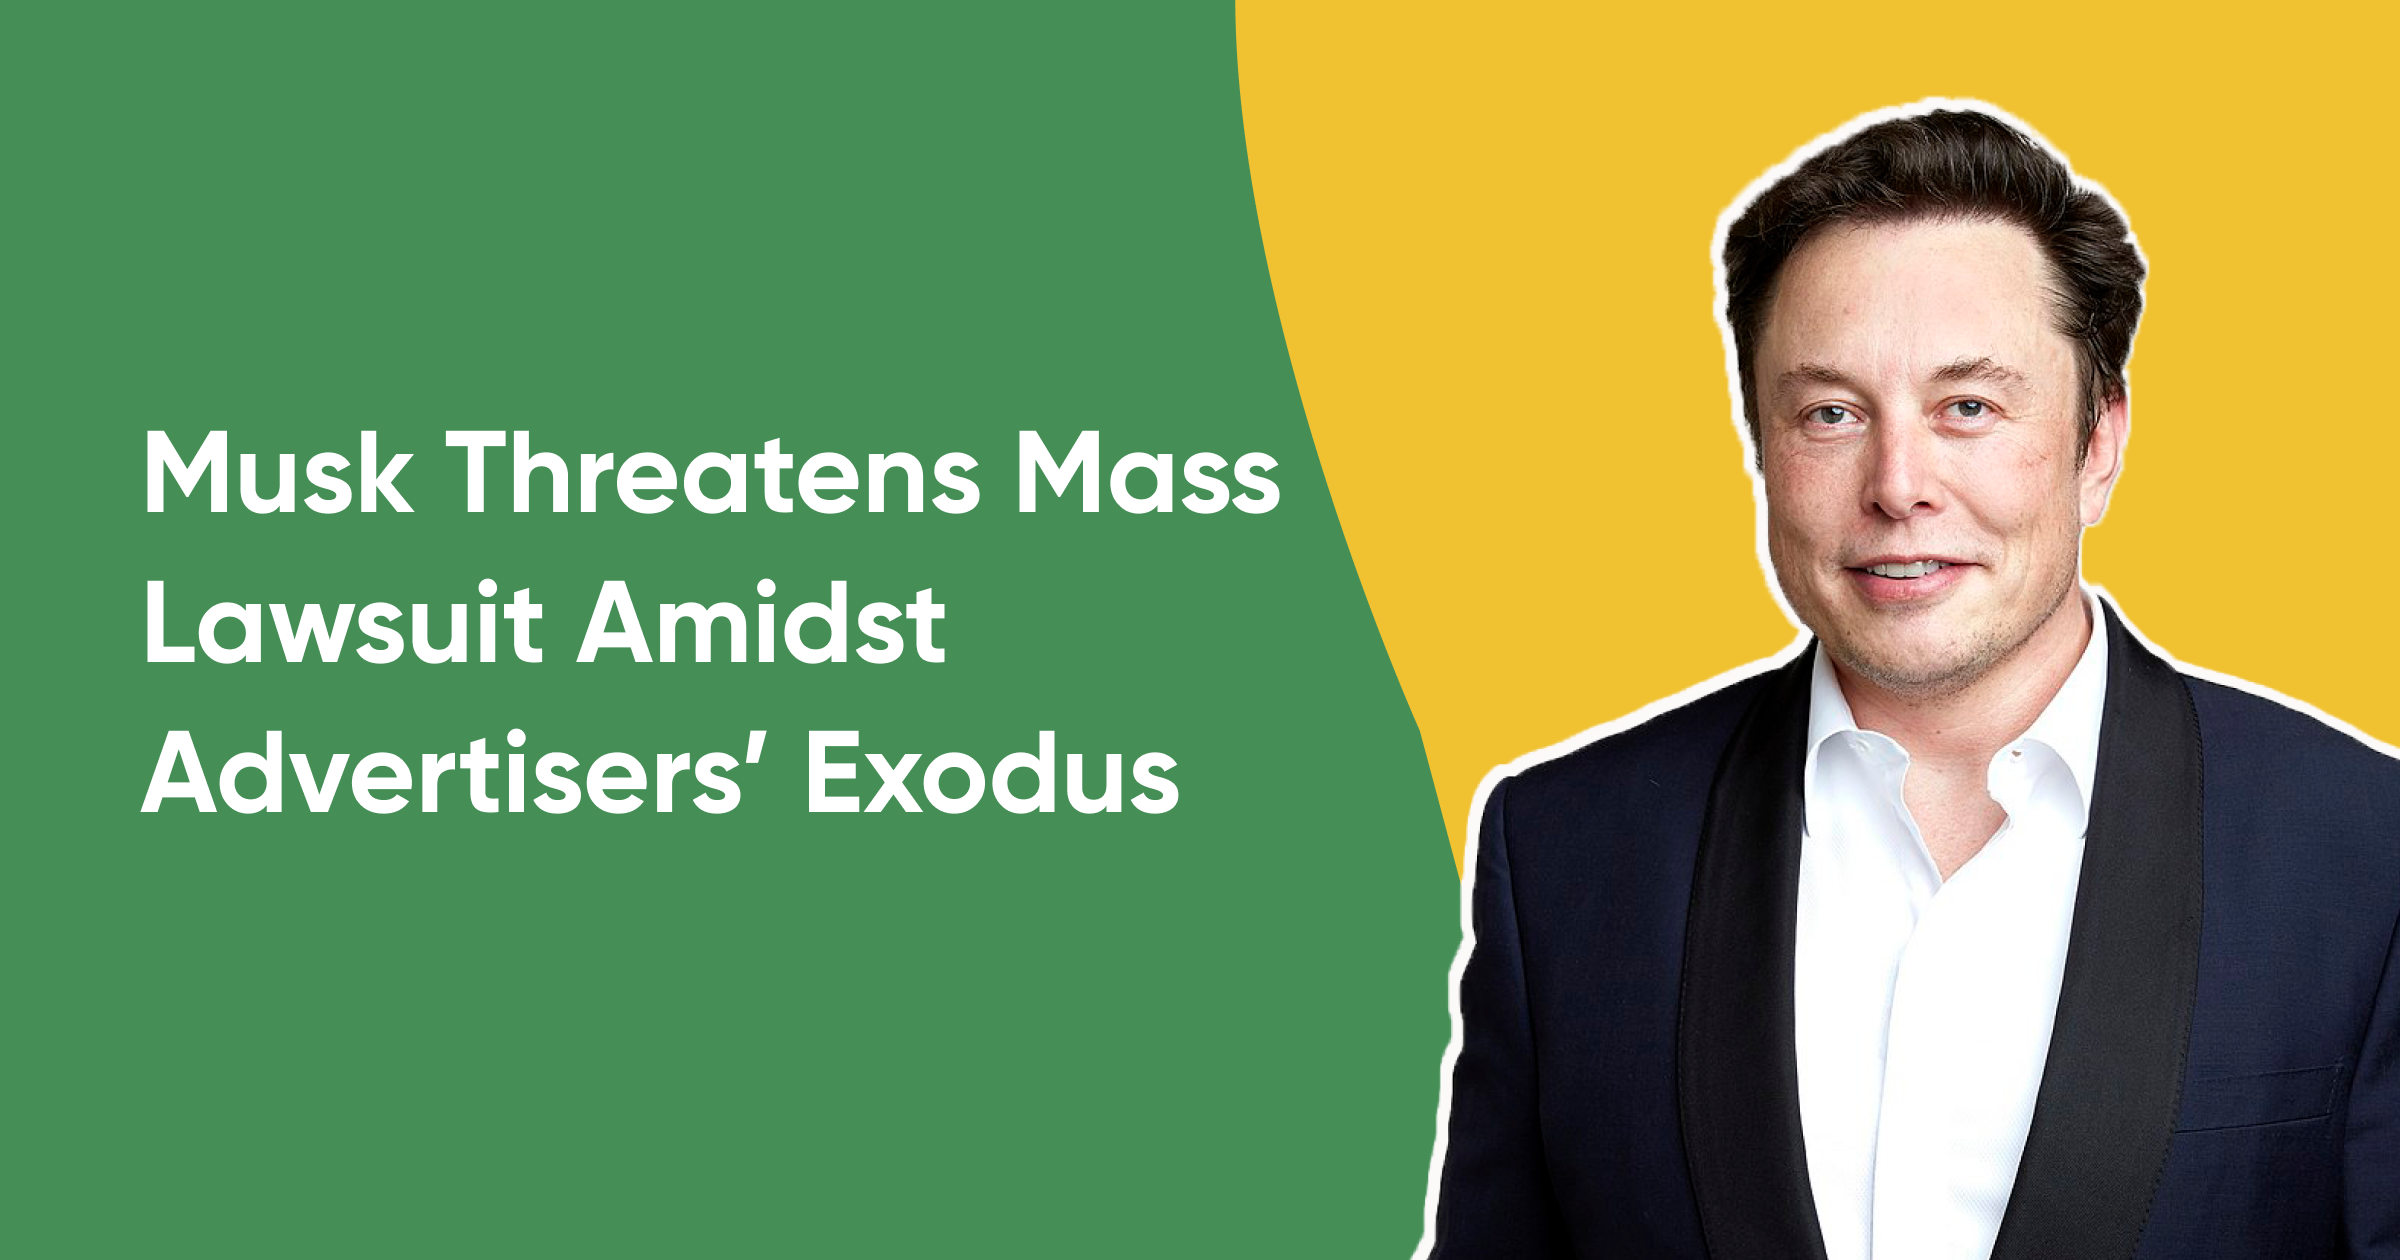 Musk Threatens Mass Lawsuit Amidst Advertisers' Exodus